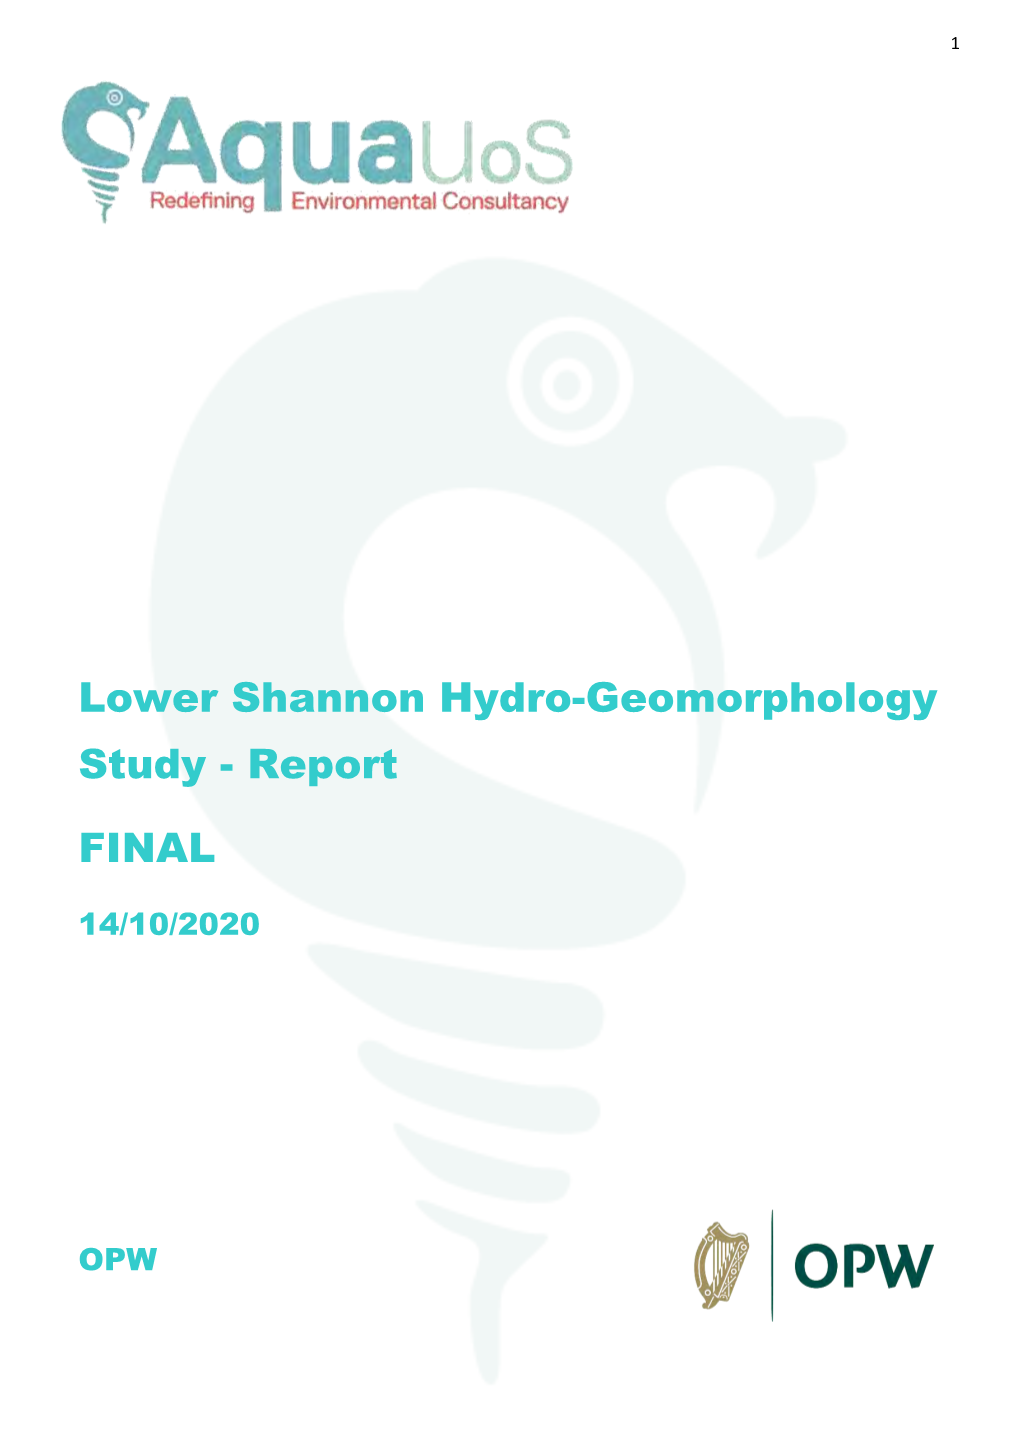 Lower Shannon Hydro-Geomorphology Study - Report